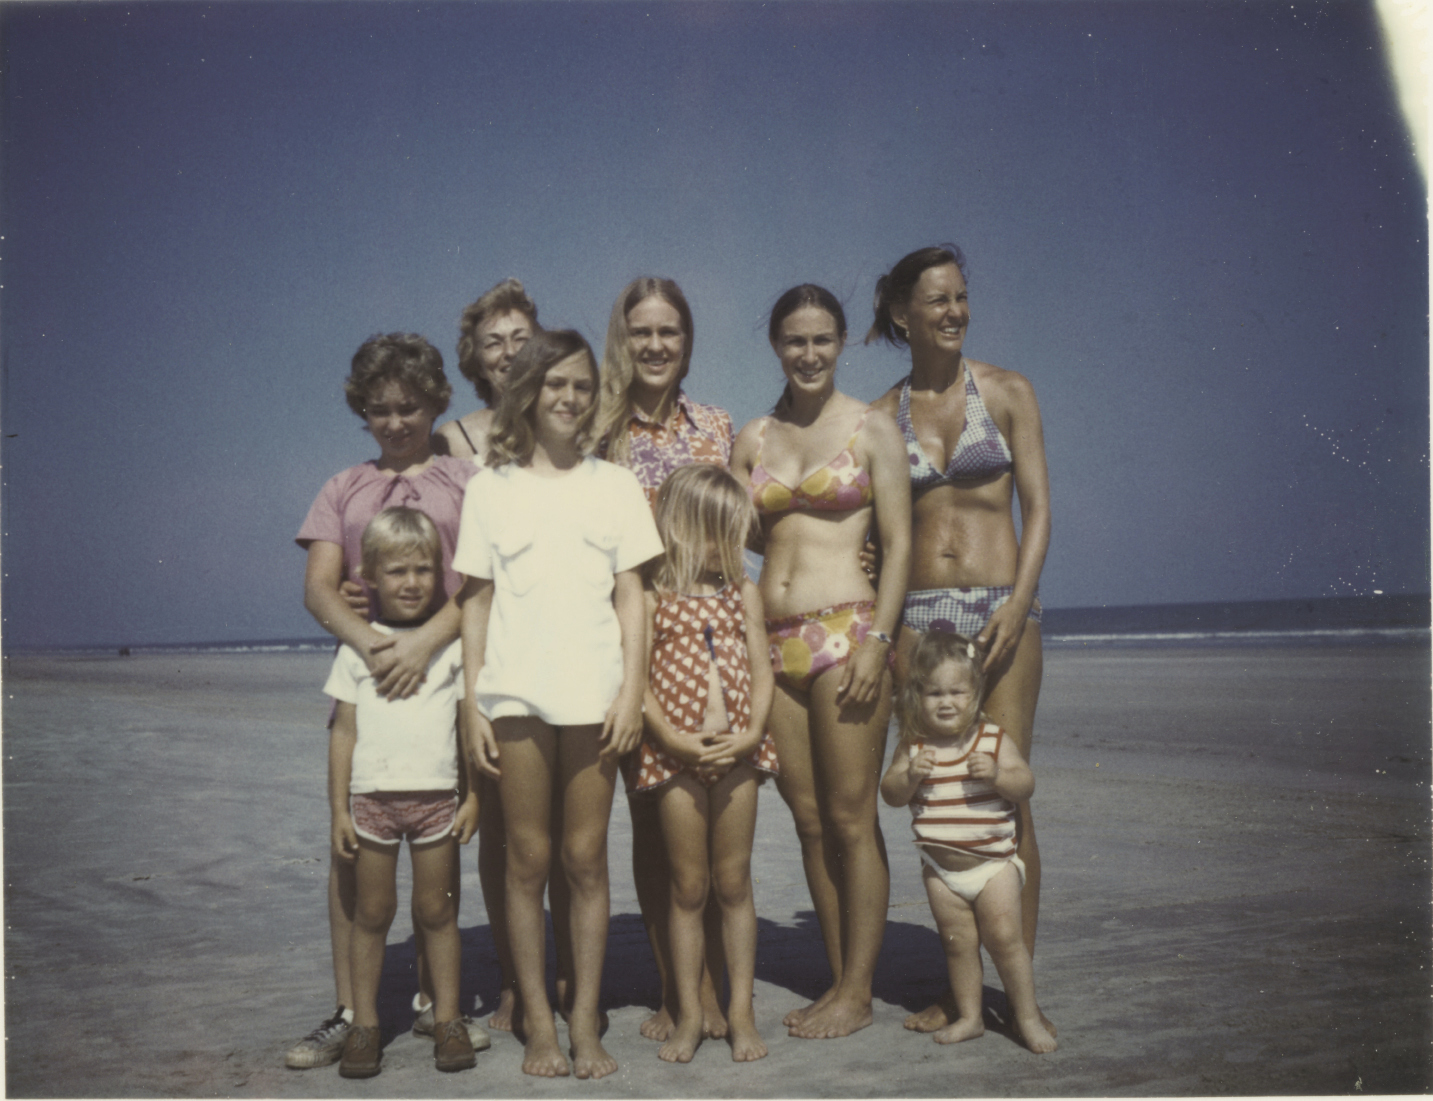 Family time on Kiawah Island, circa 1975